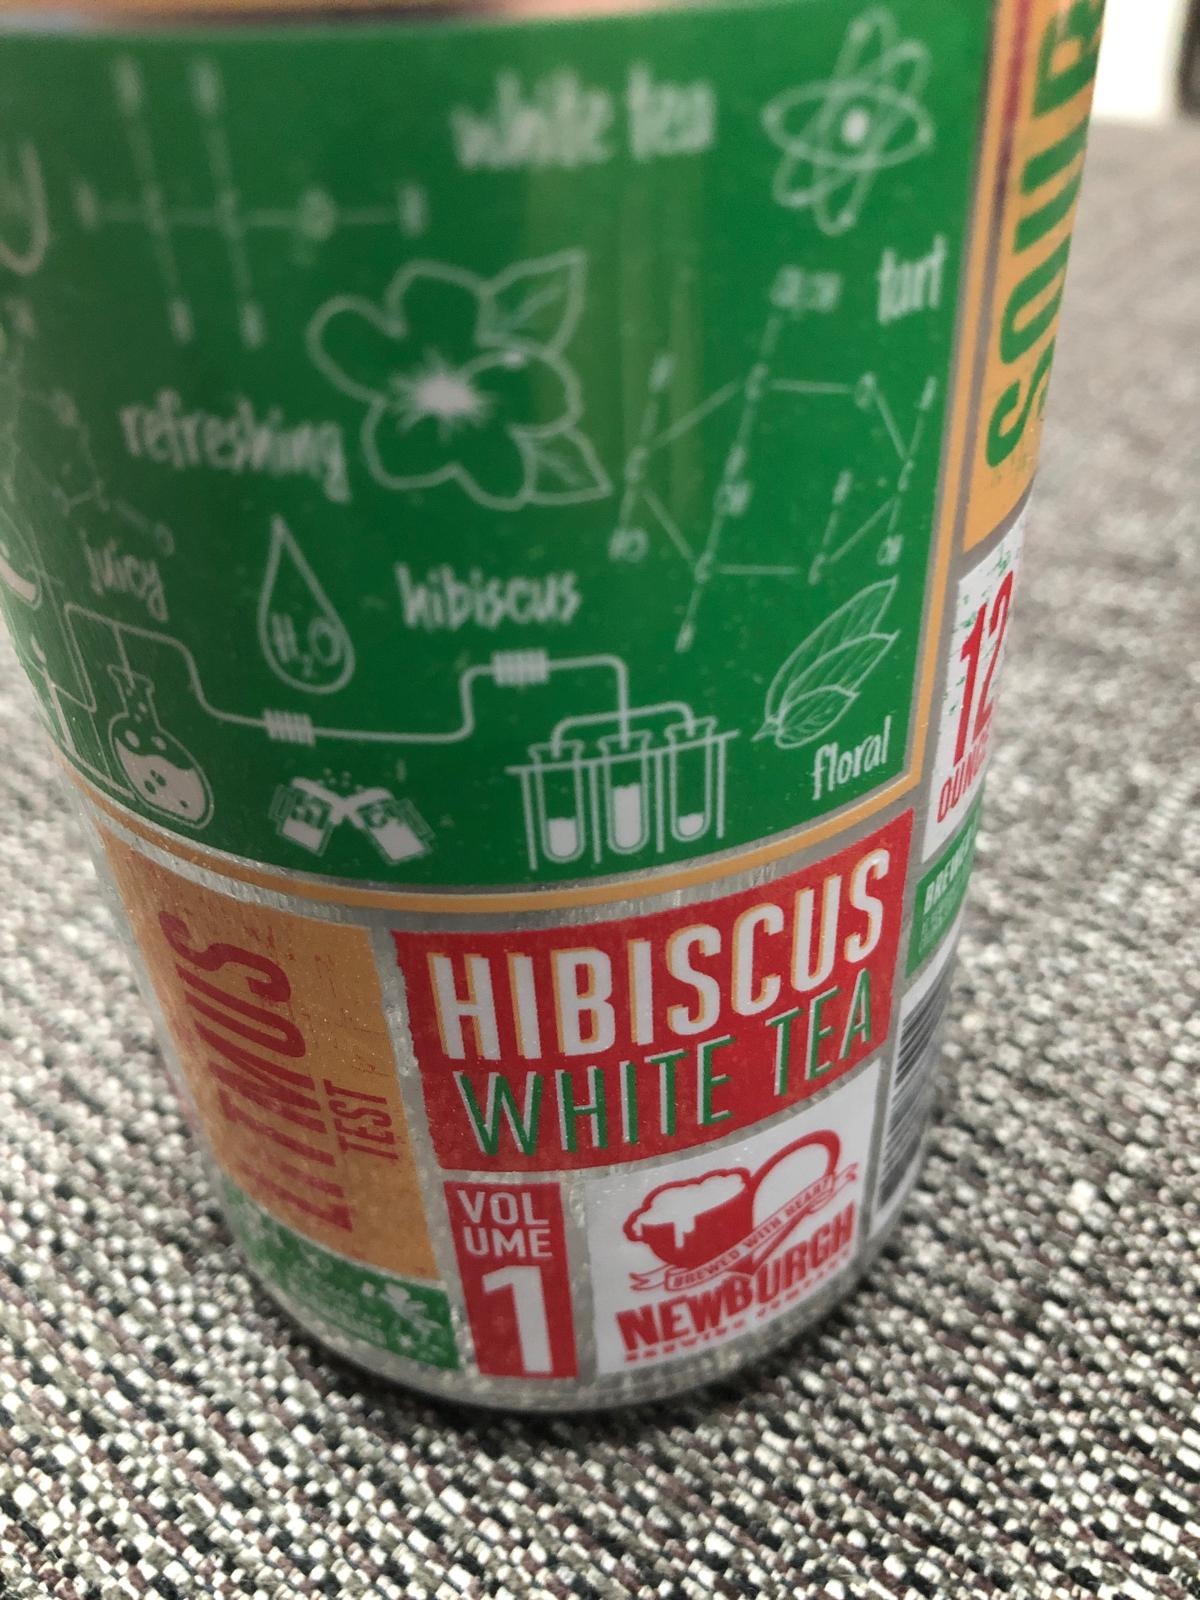 The Litmus Test Volume 1 Hibiscus White Tea